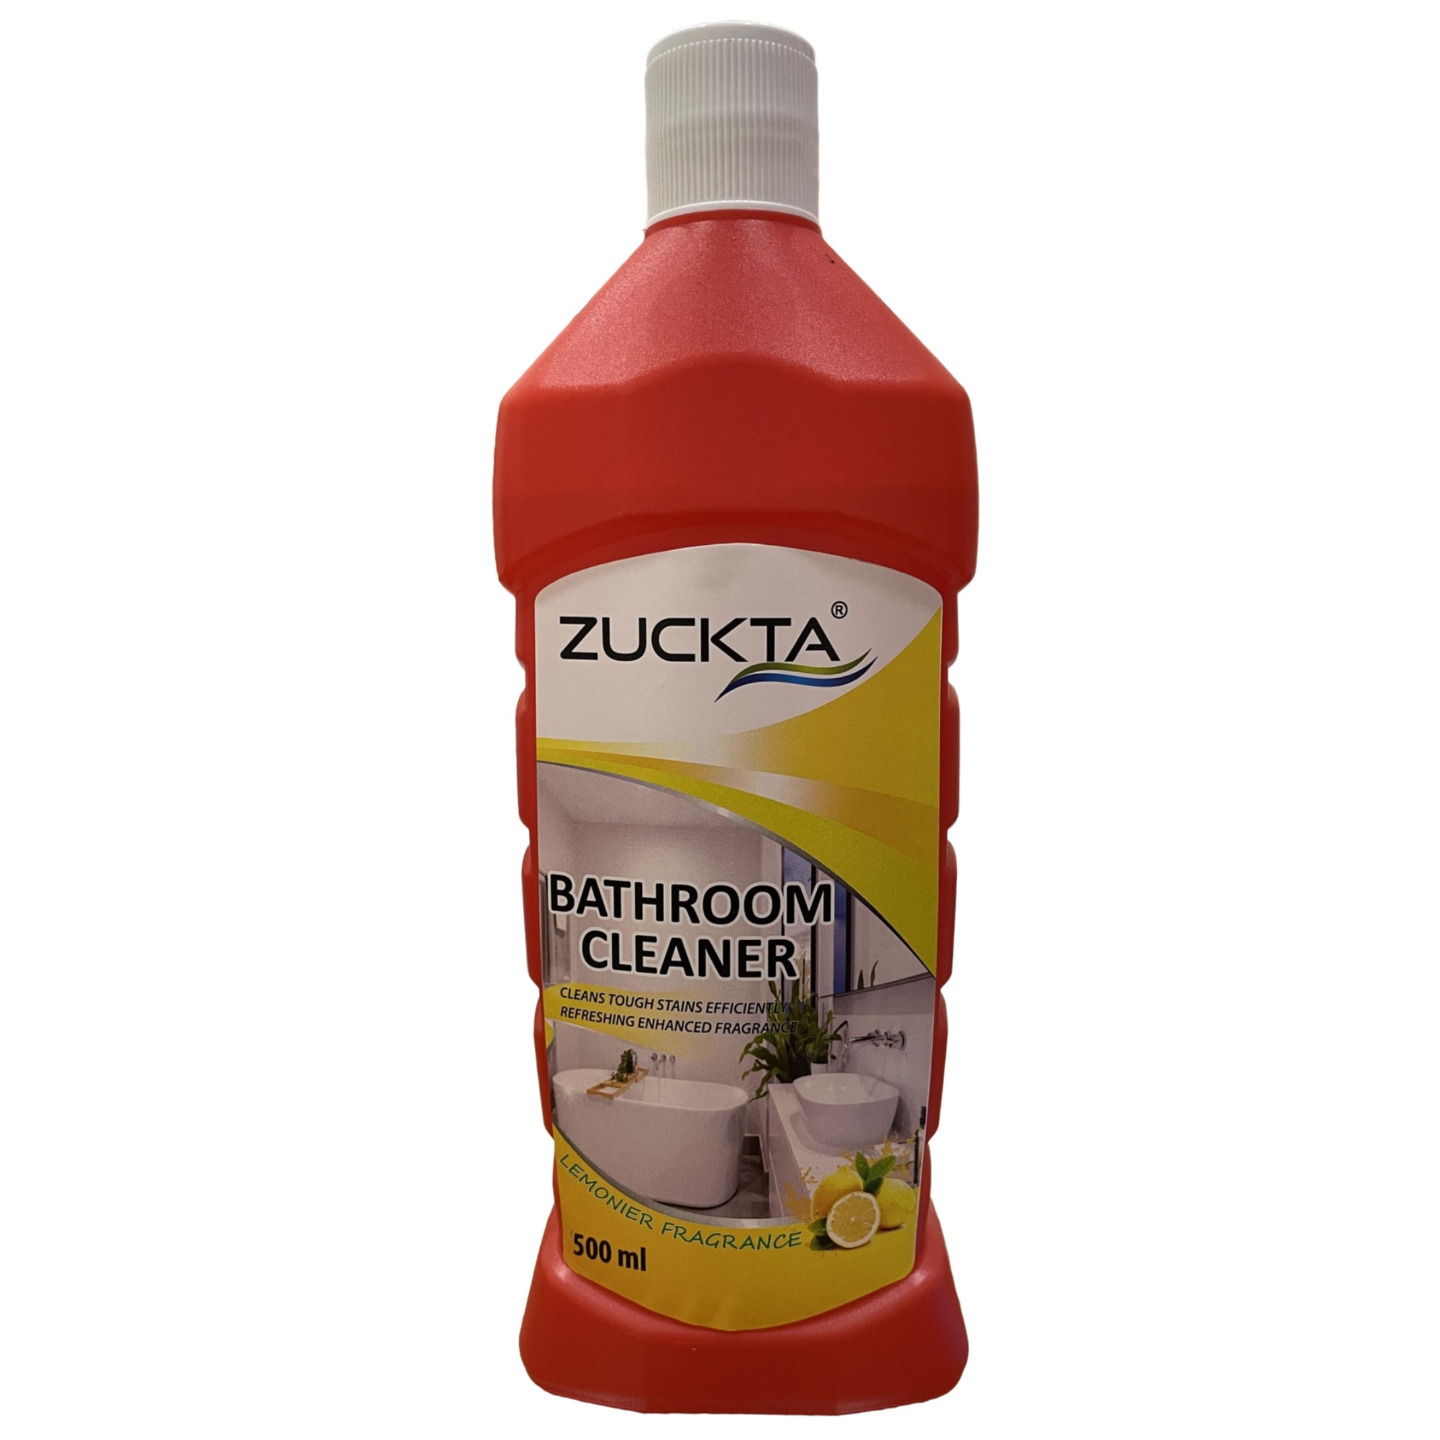 ZUCKTA Bathroom Cleaner 500 ml Buy 1 Get 1 FREE